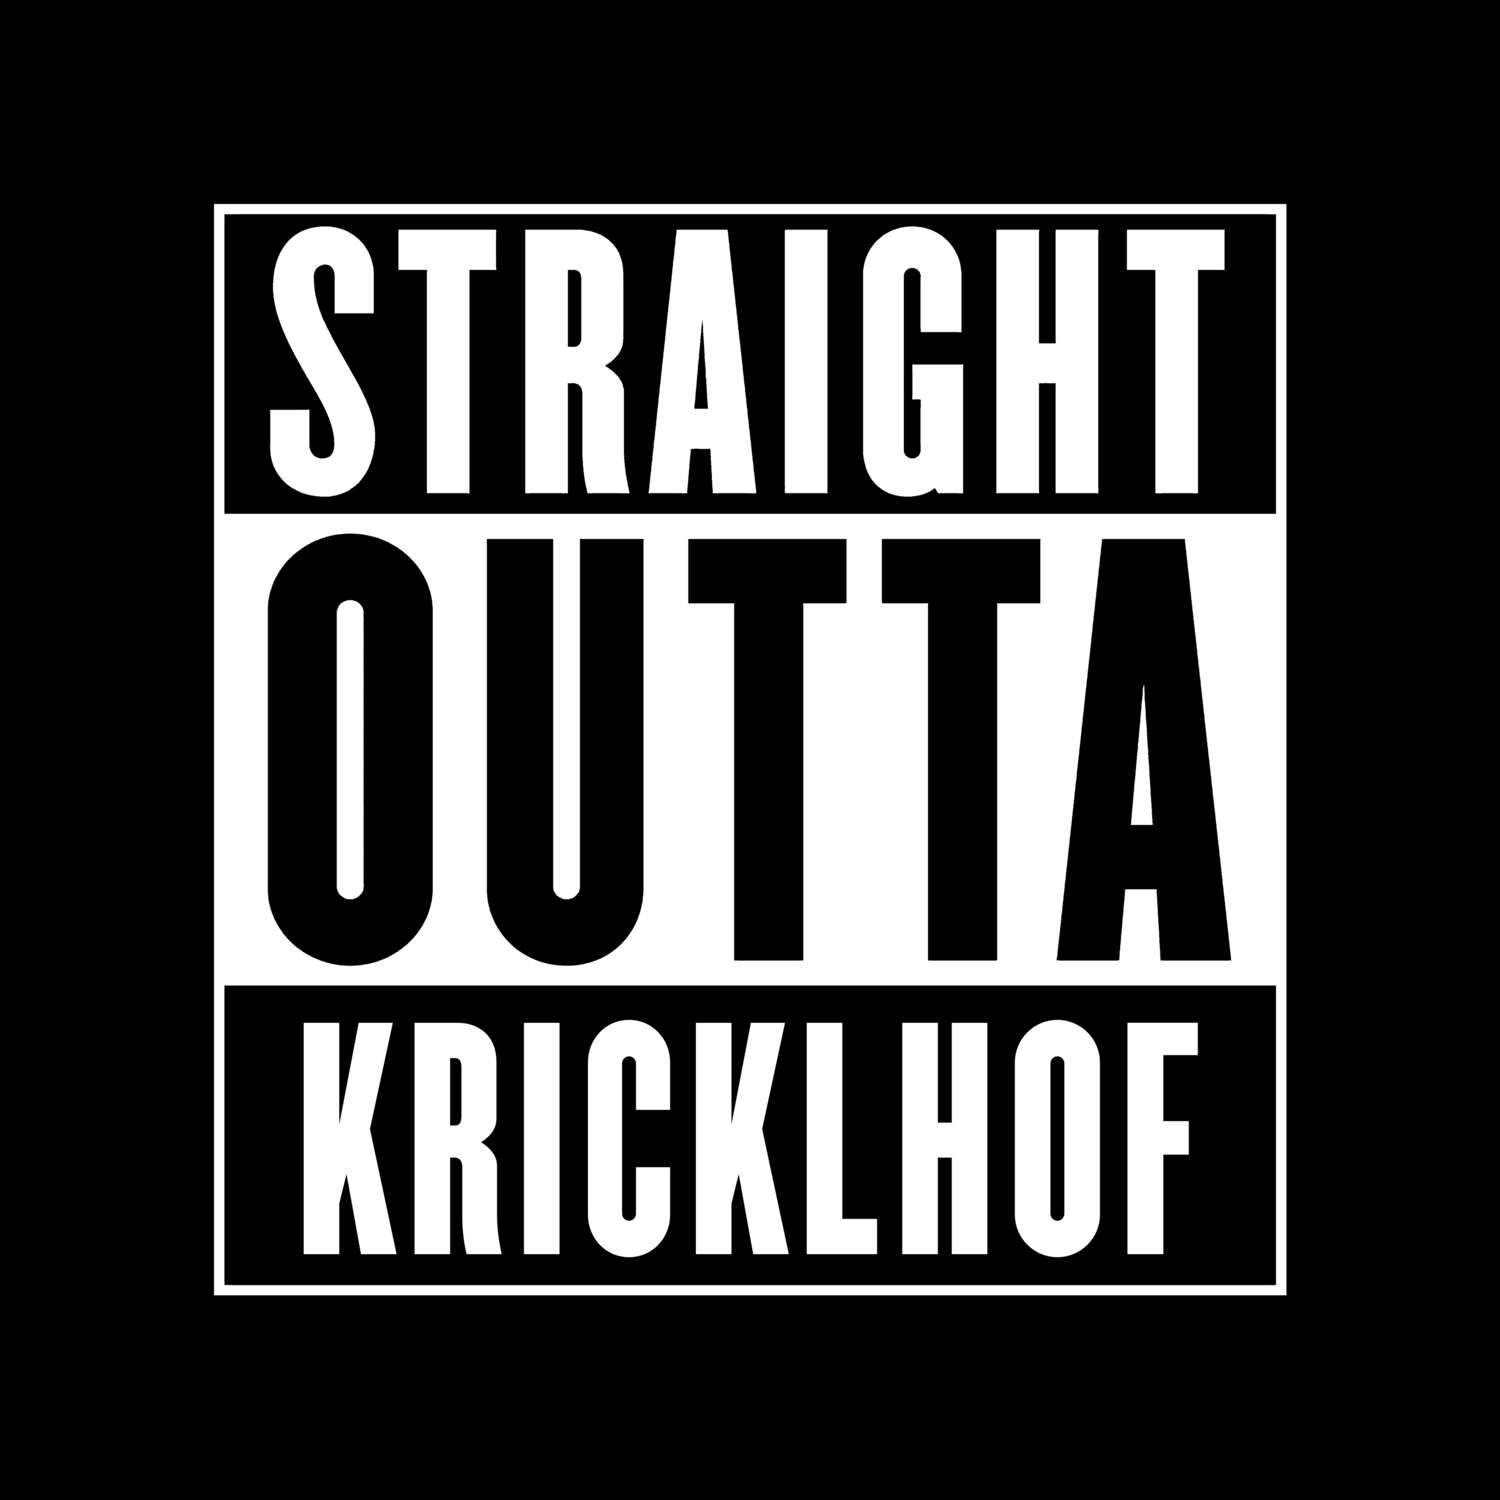 Kricklhof T-Shirt »Straight Outta«